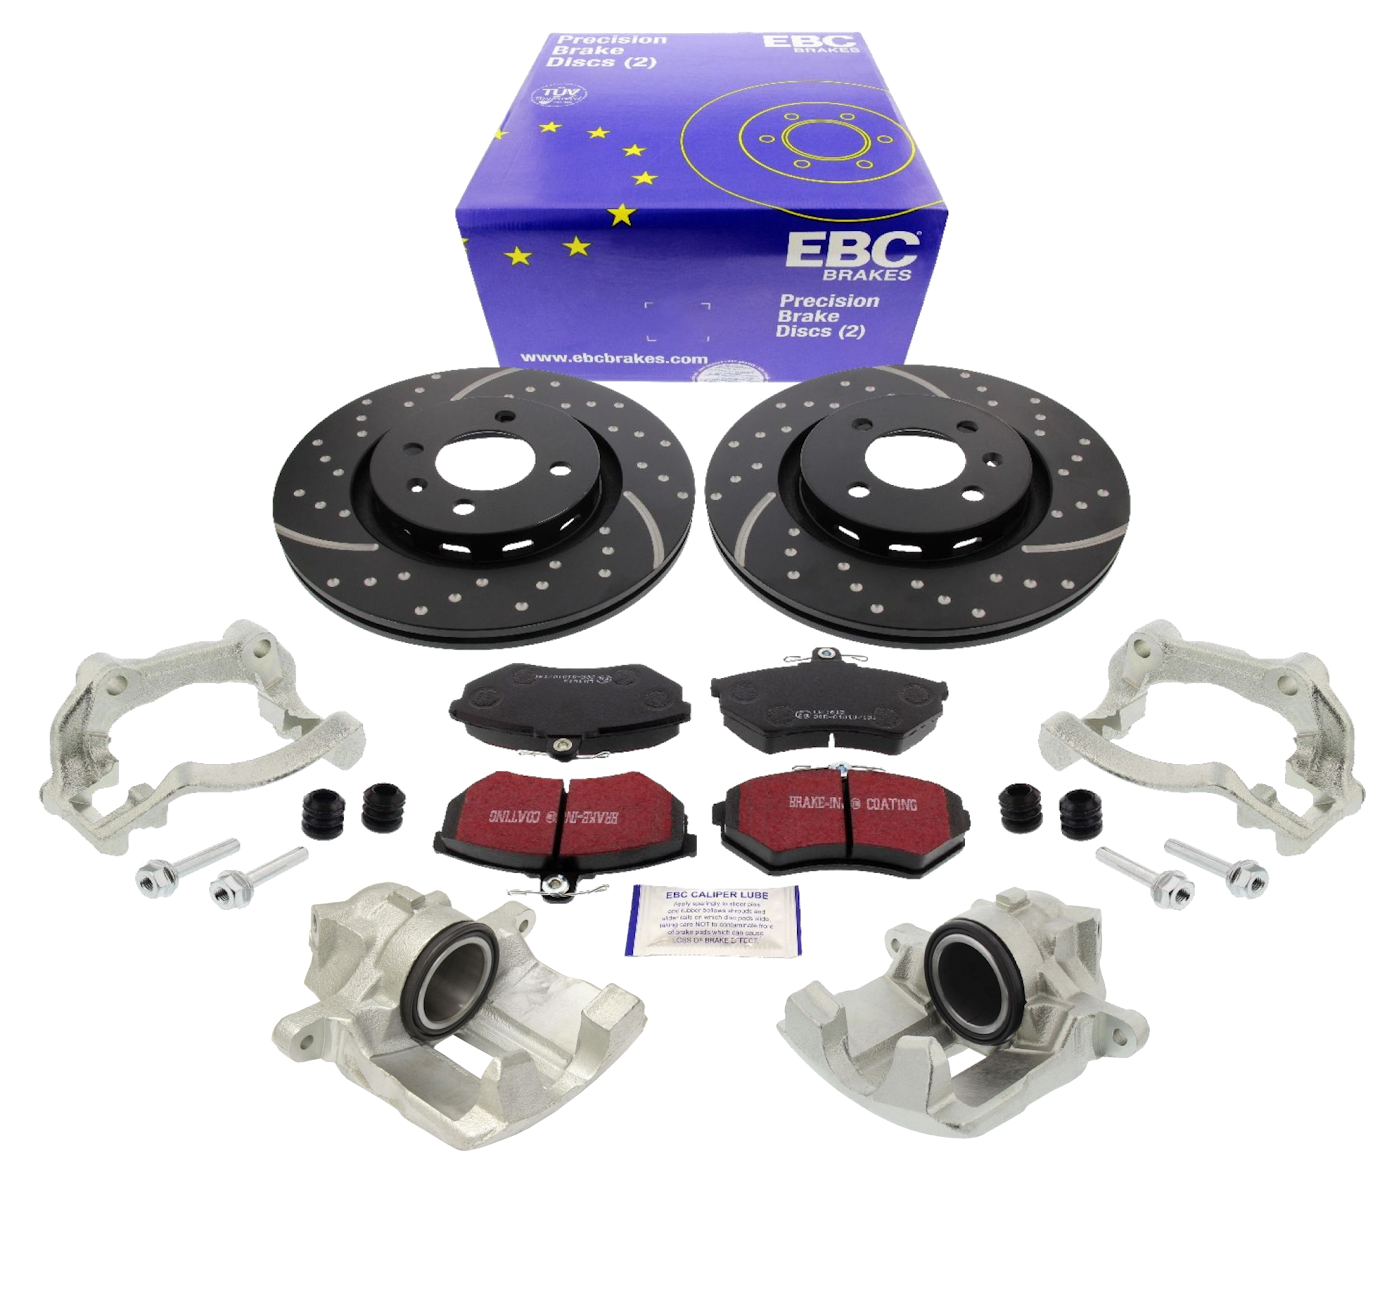 EBC-Bremsensatz, Turbo Groove Disc Black + Bremsbeläge, Blackstuff, VA, VW Golf 2/3, Corrado, G60-Bremse, 280 mm, inkl. Sättel + Halter